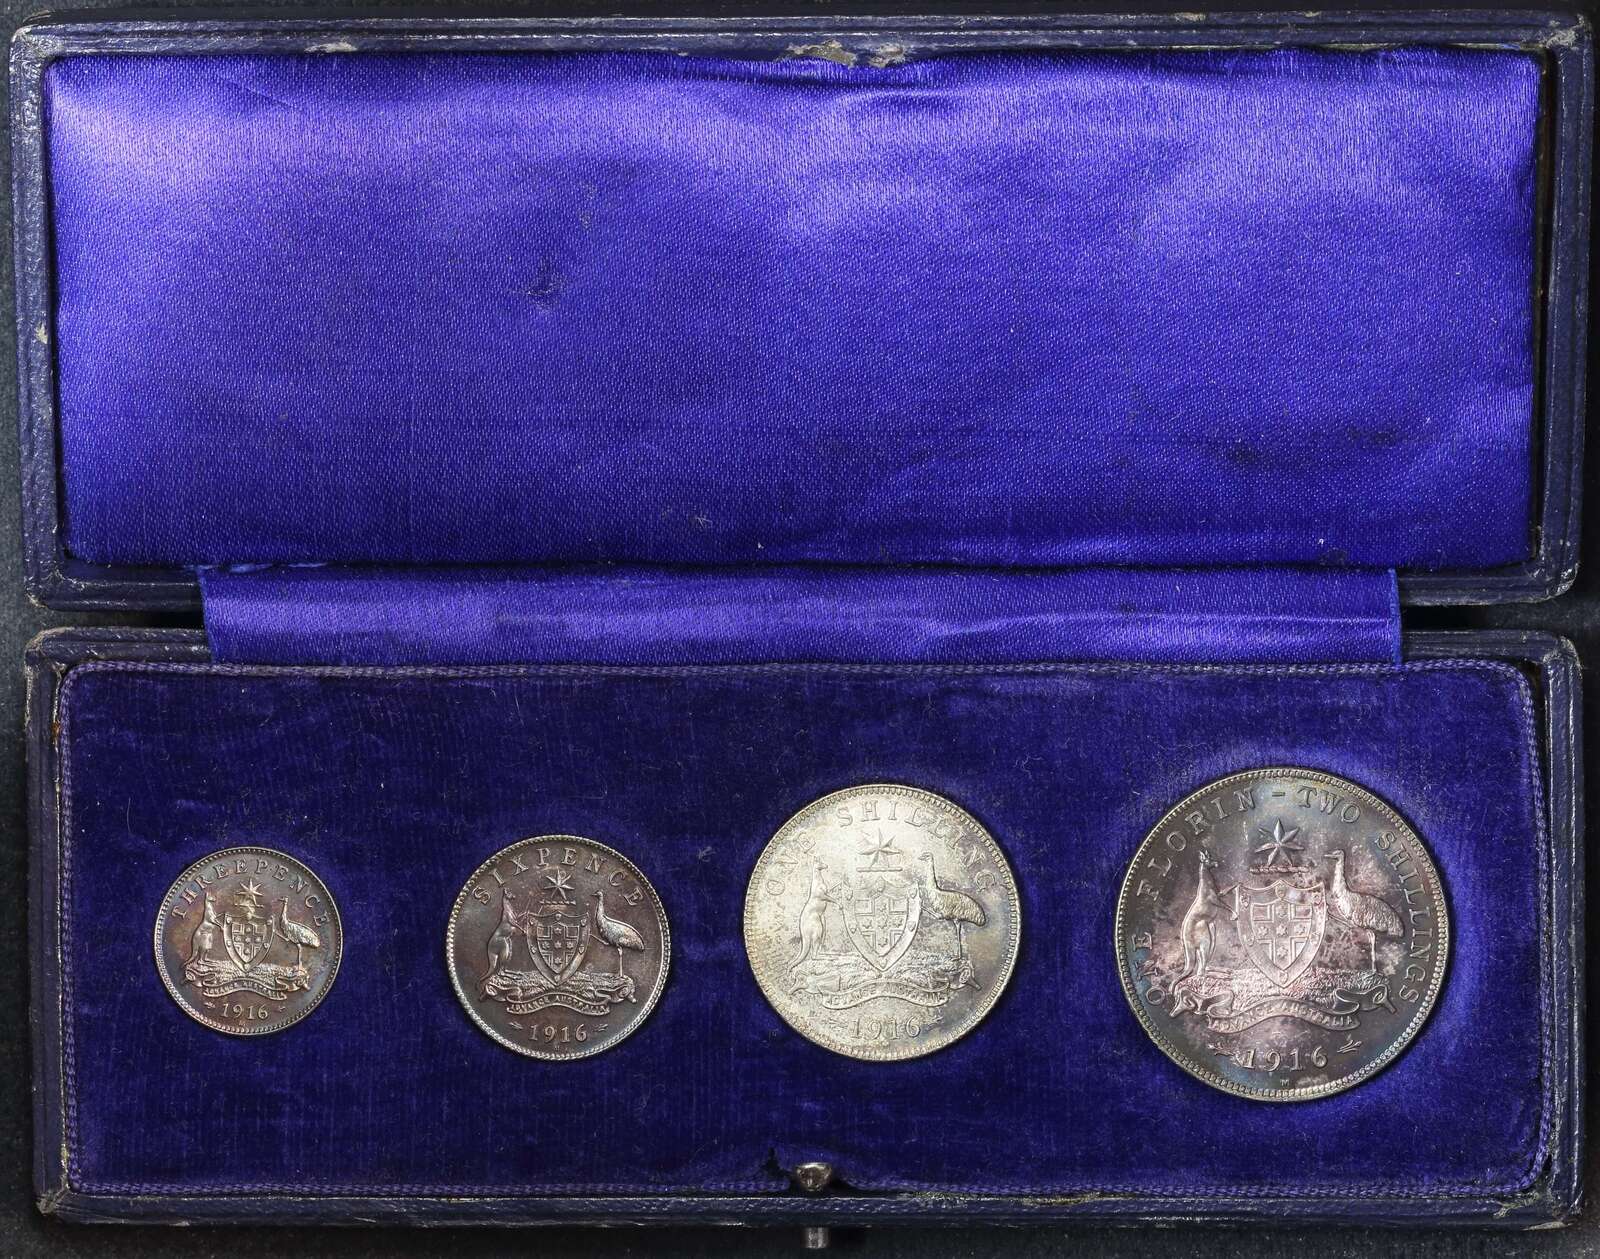 1916 Melbourne Specimen Silver 4 Coin Set in Presentation Case PCGS SP64 ~ SP67+ product image